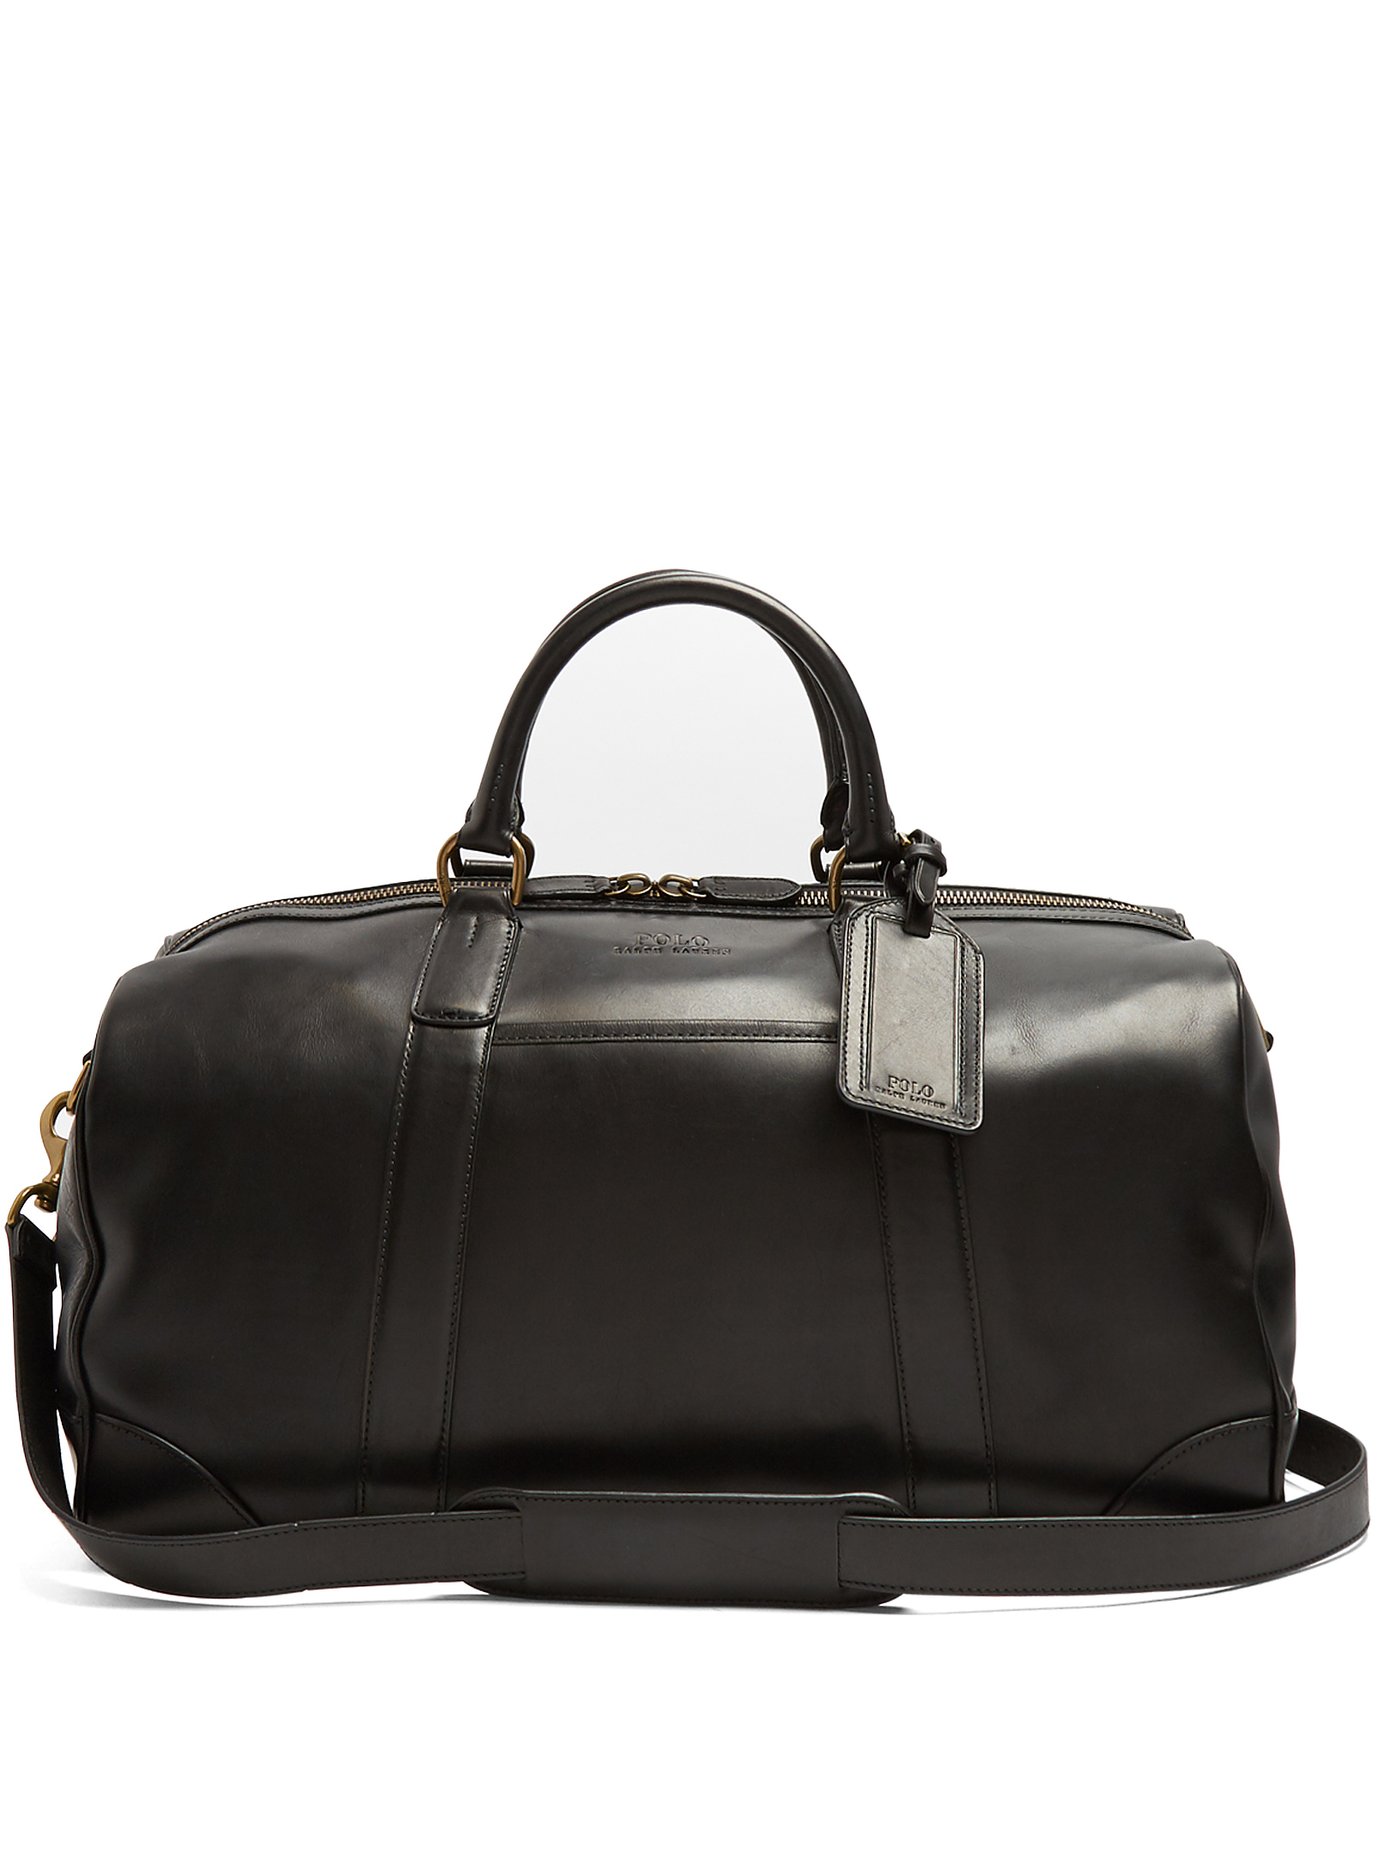 Leather duffle bag | Polo Ralph Lauren 